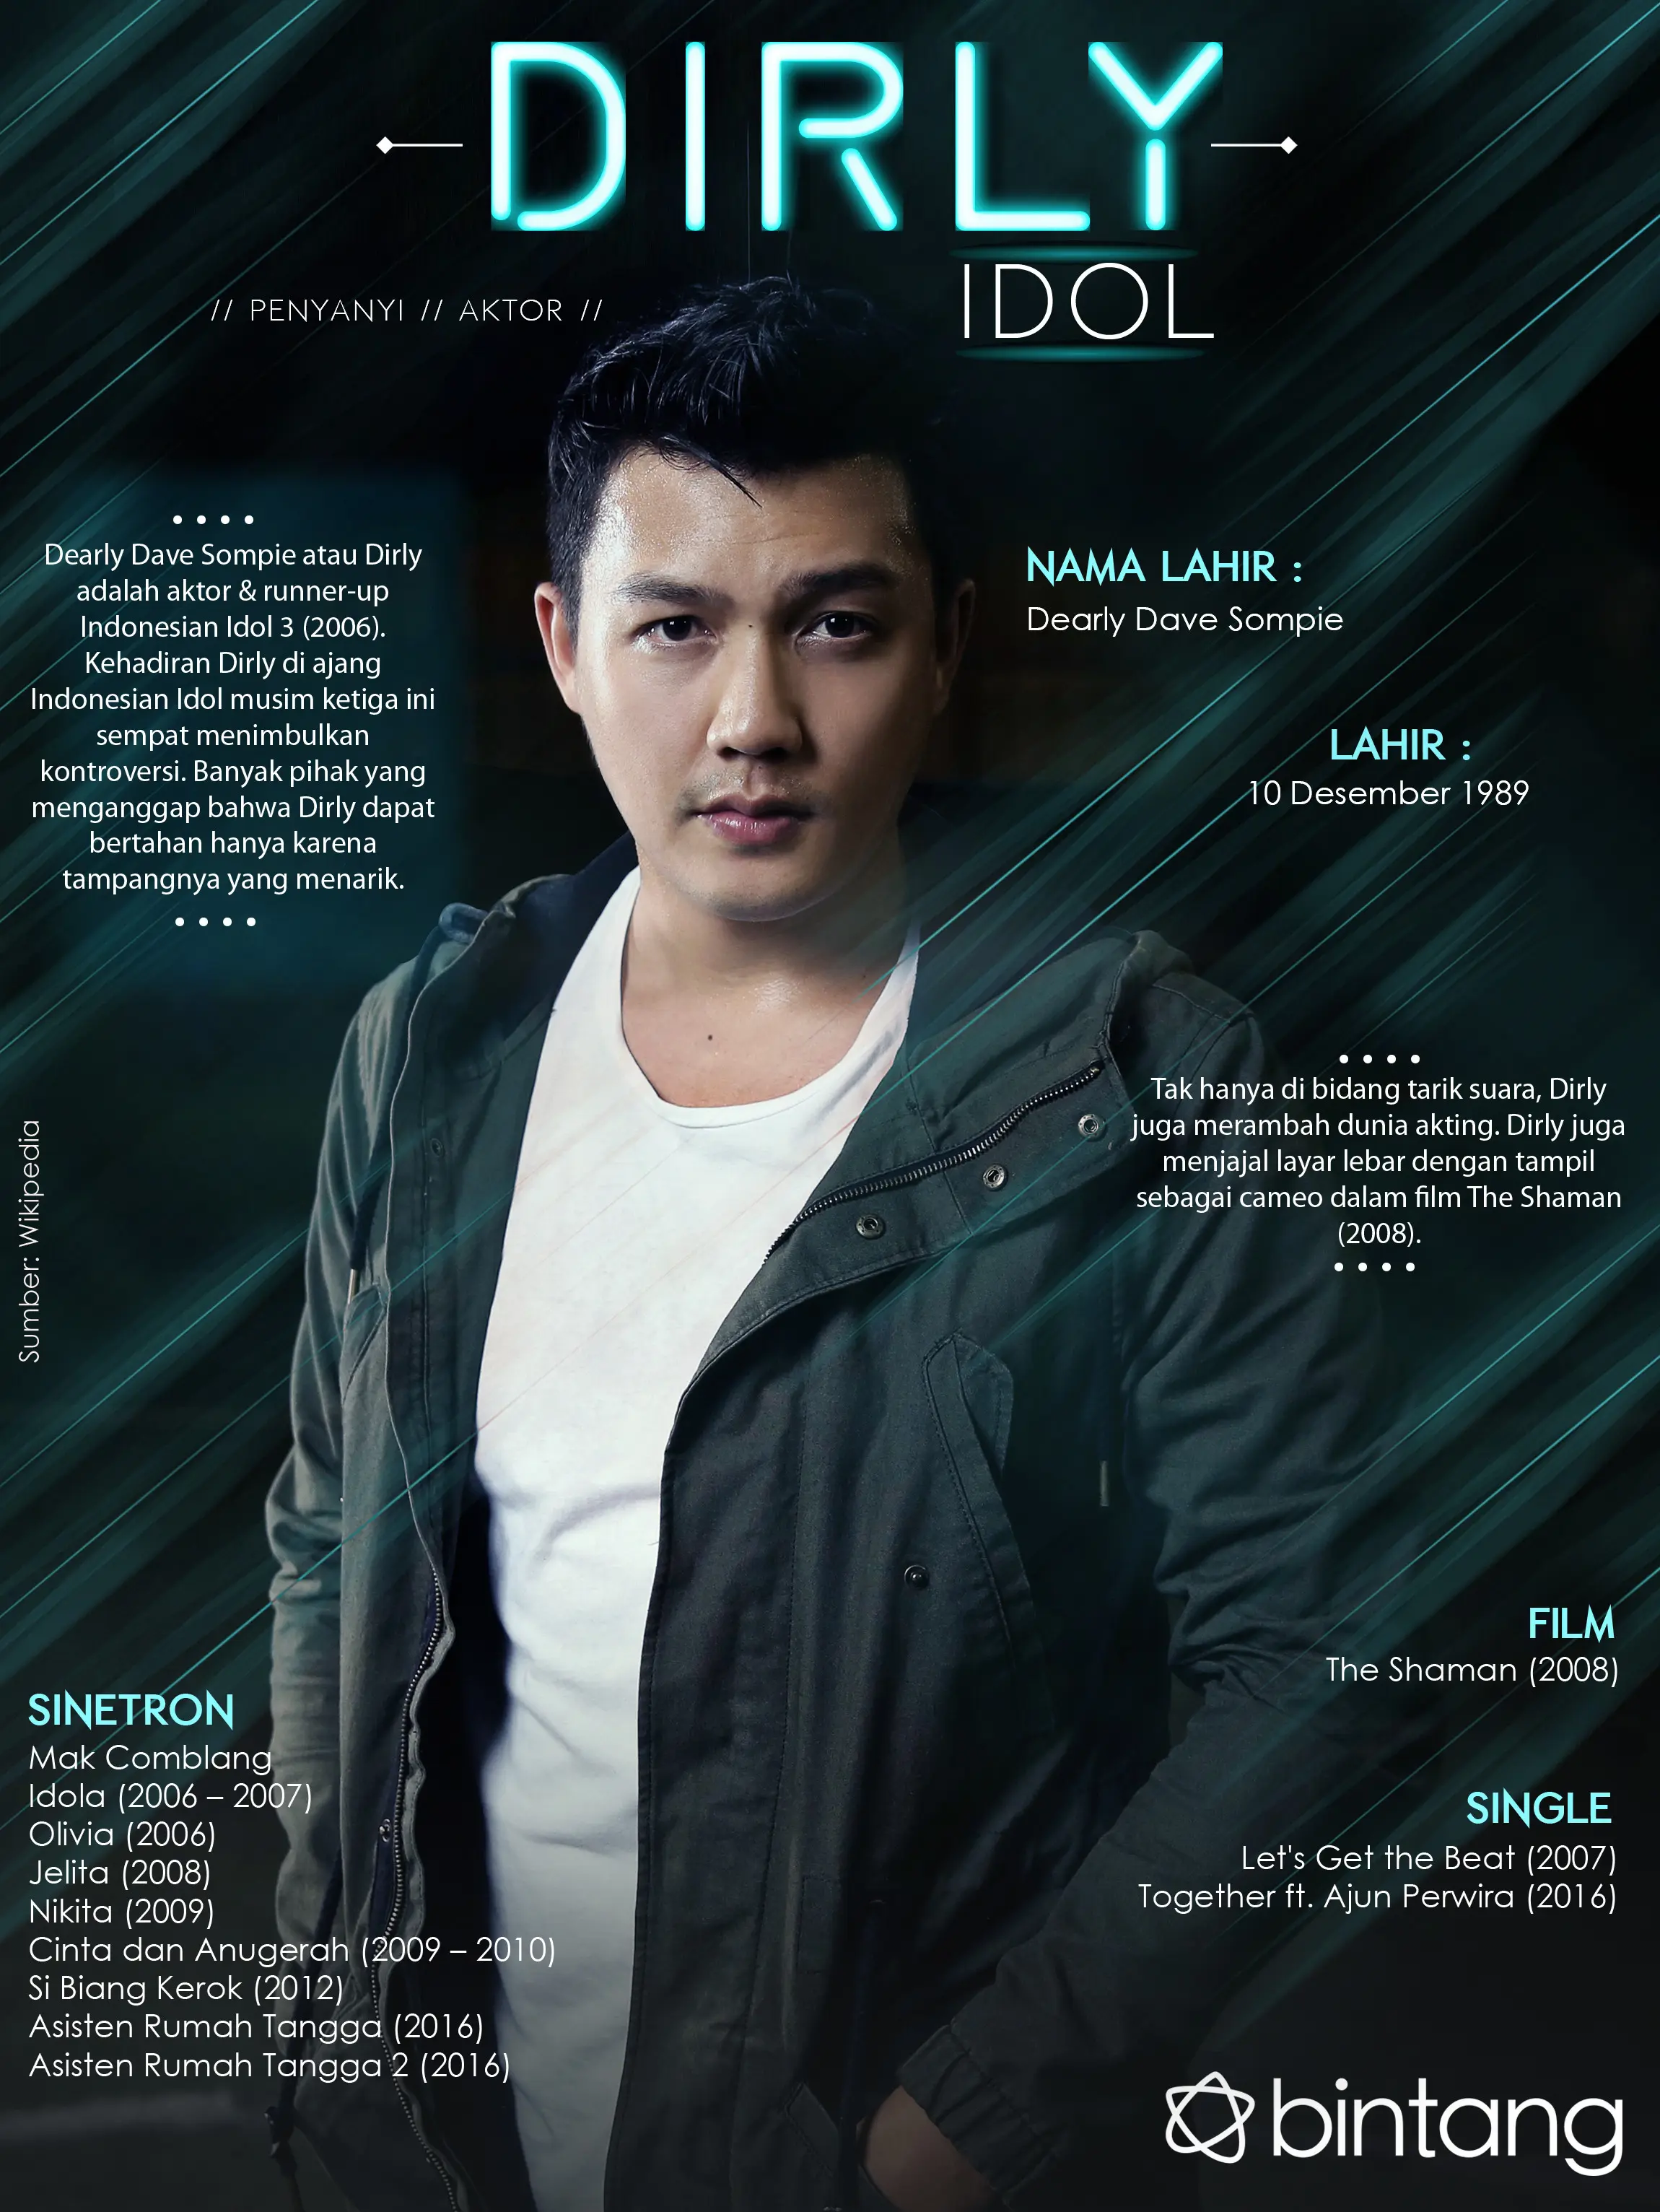 Celeb Bio Dirly Idol (Foto: Adrian Putra, Desain: Nurman Abdul Hakim/Bintang.com)